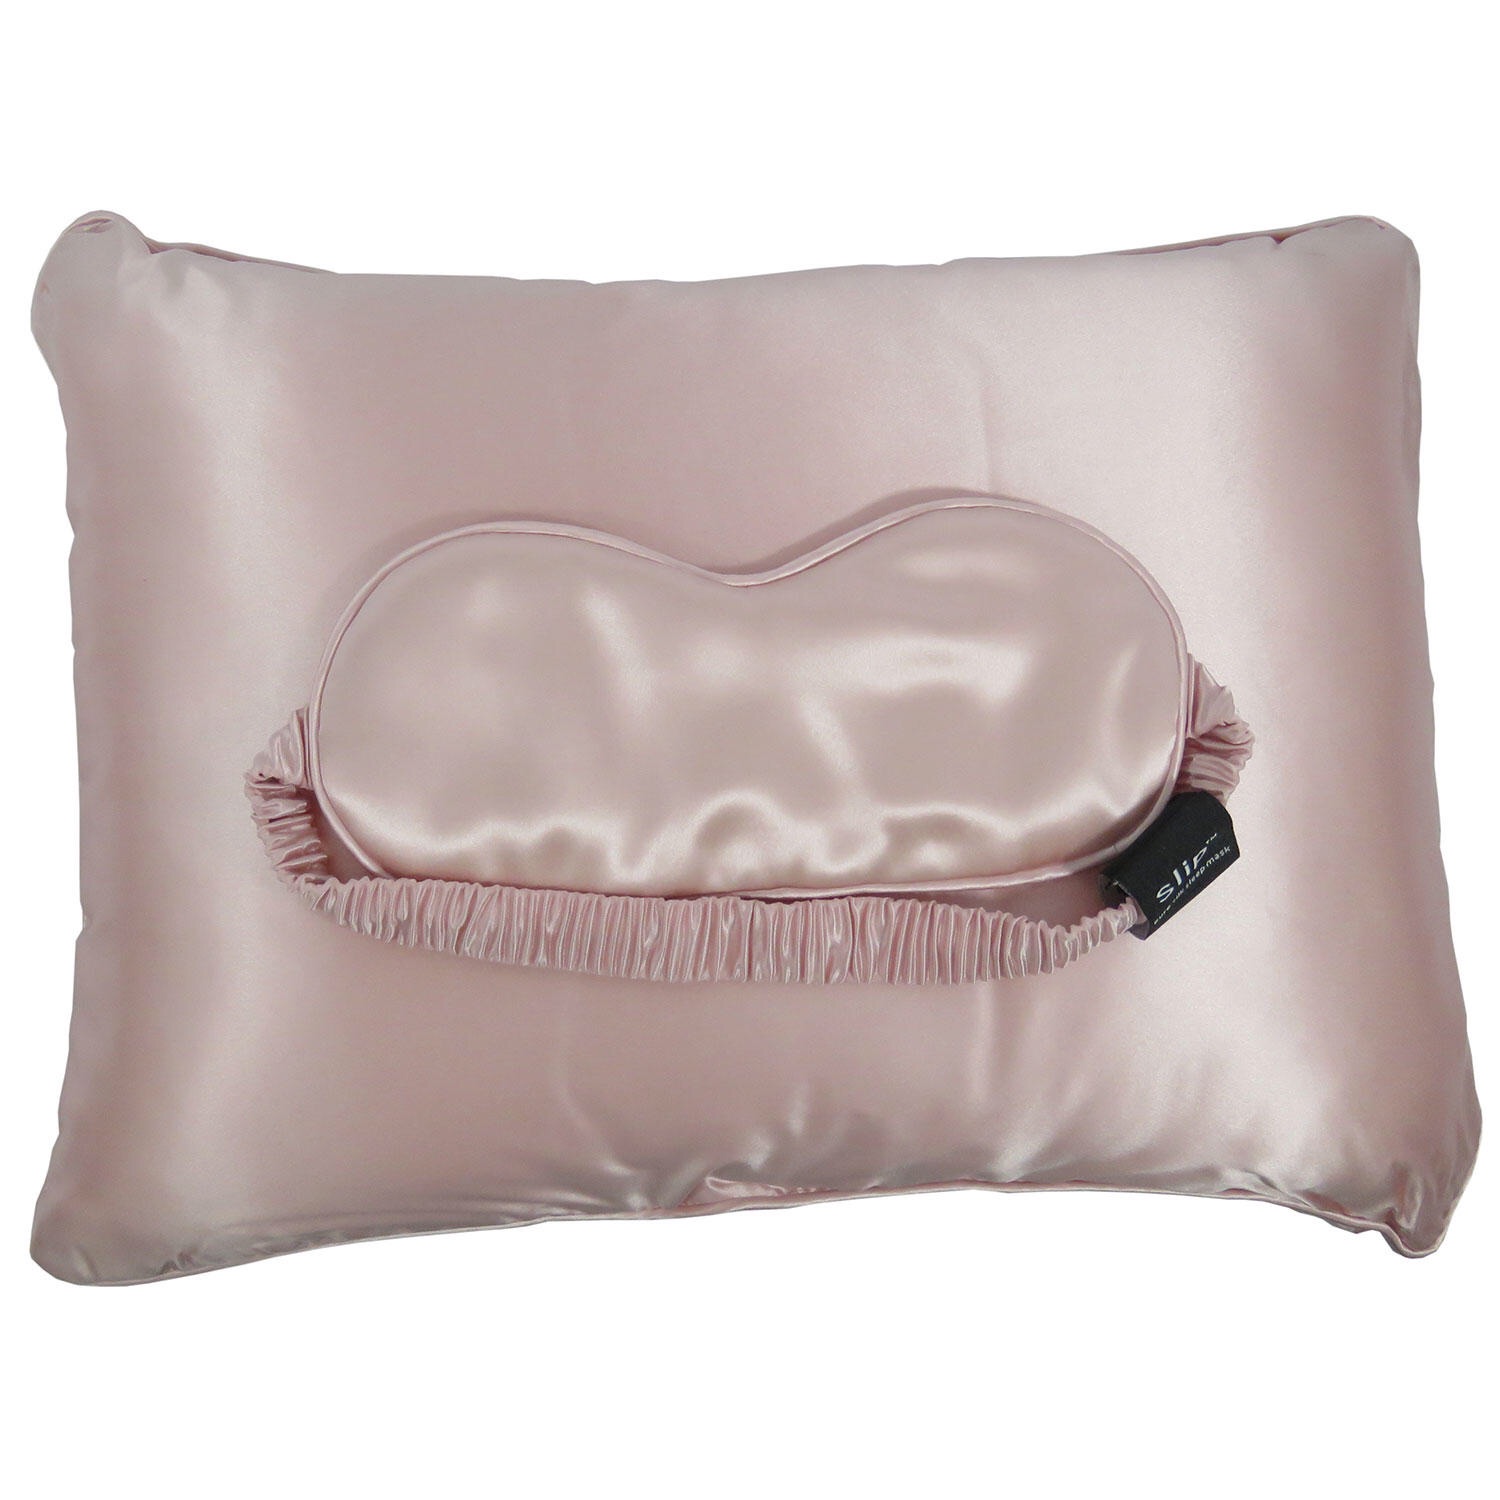 Slip Pure Silk Pillow and Eye Mask Travel Set 眼罩枕头丝绸套装